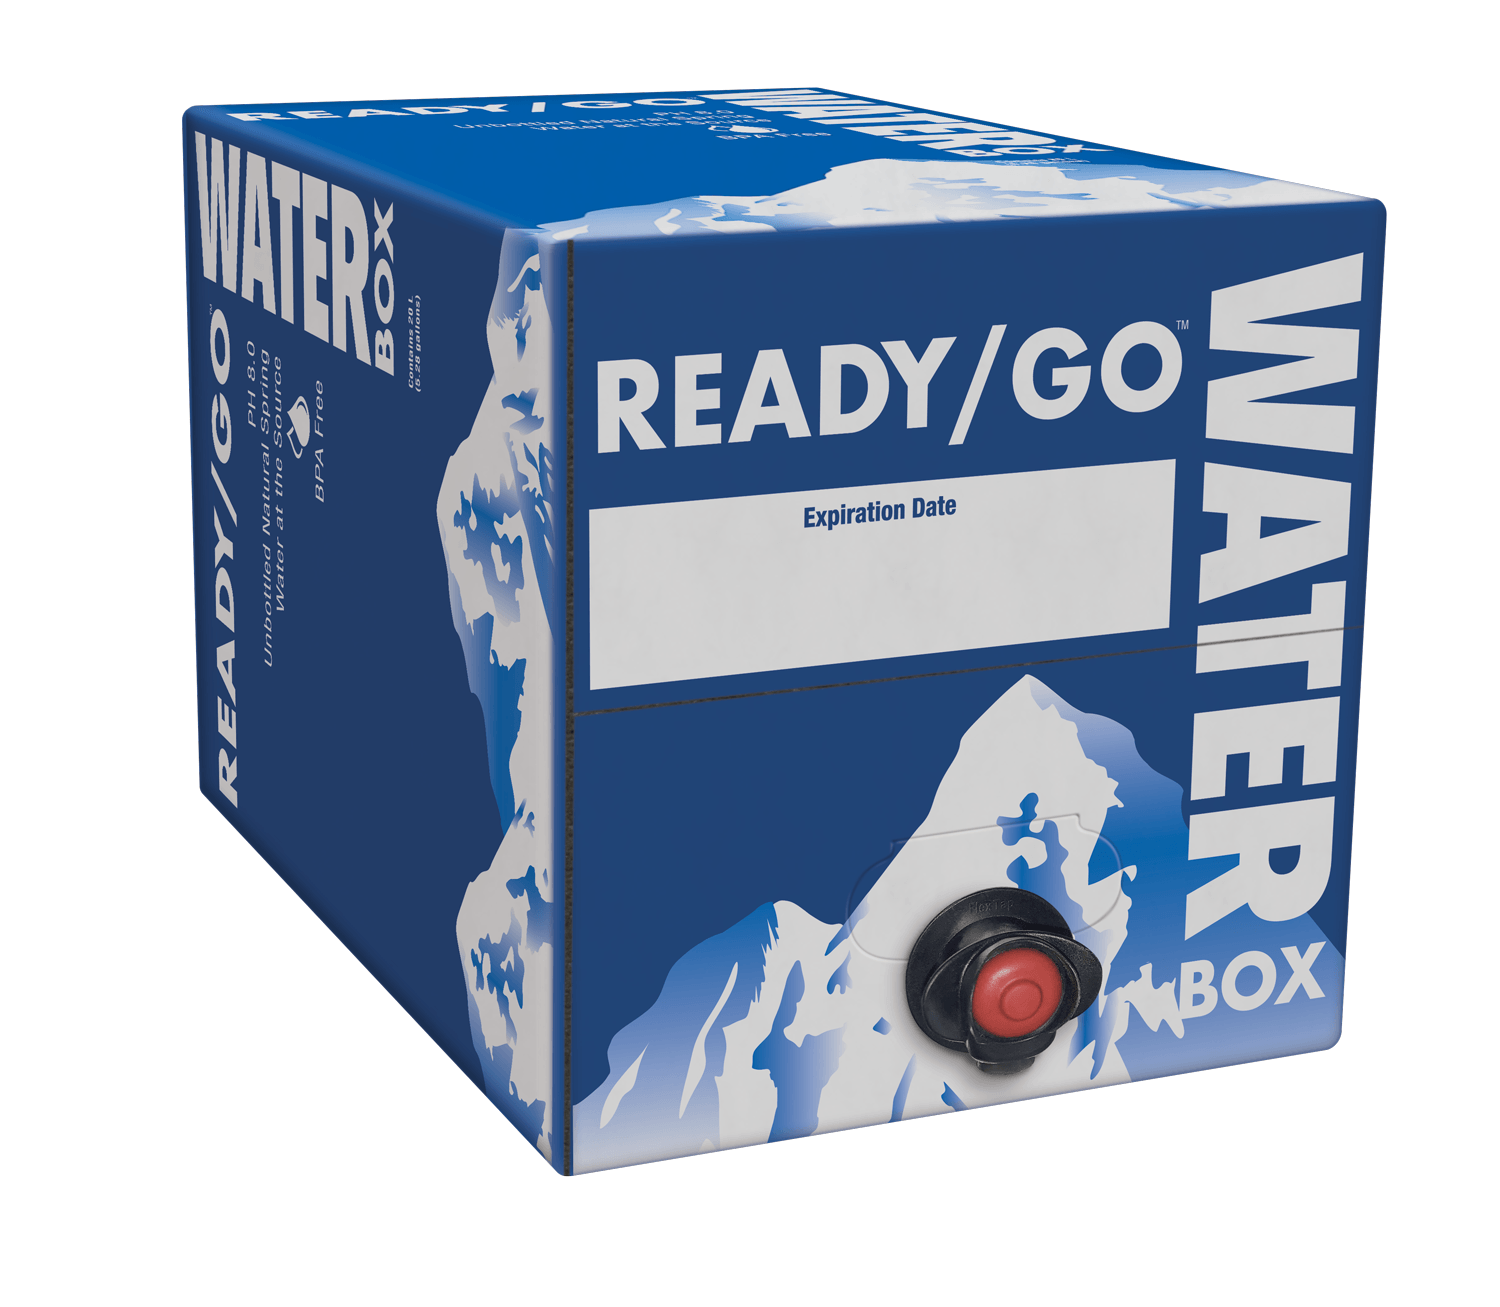 A 5 Gallon Ready/Go® Water Box.